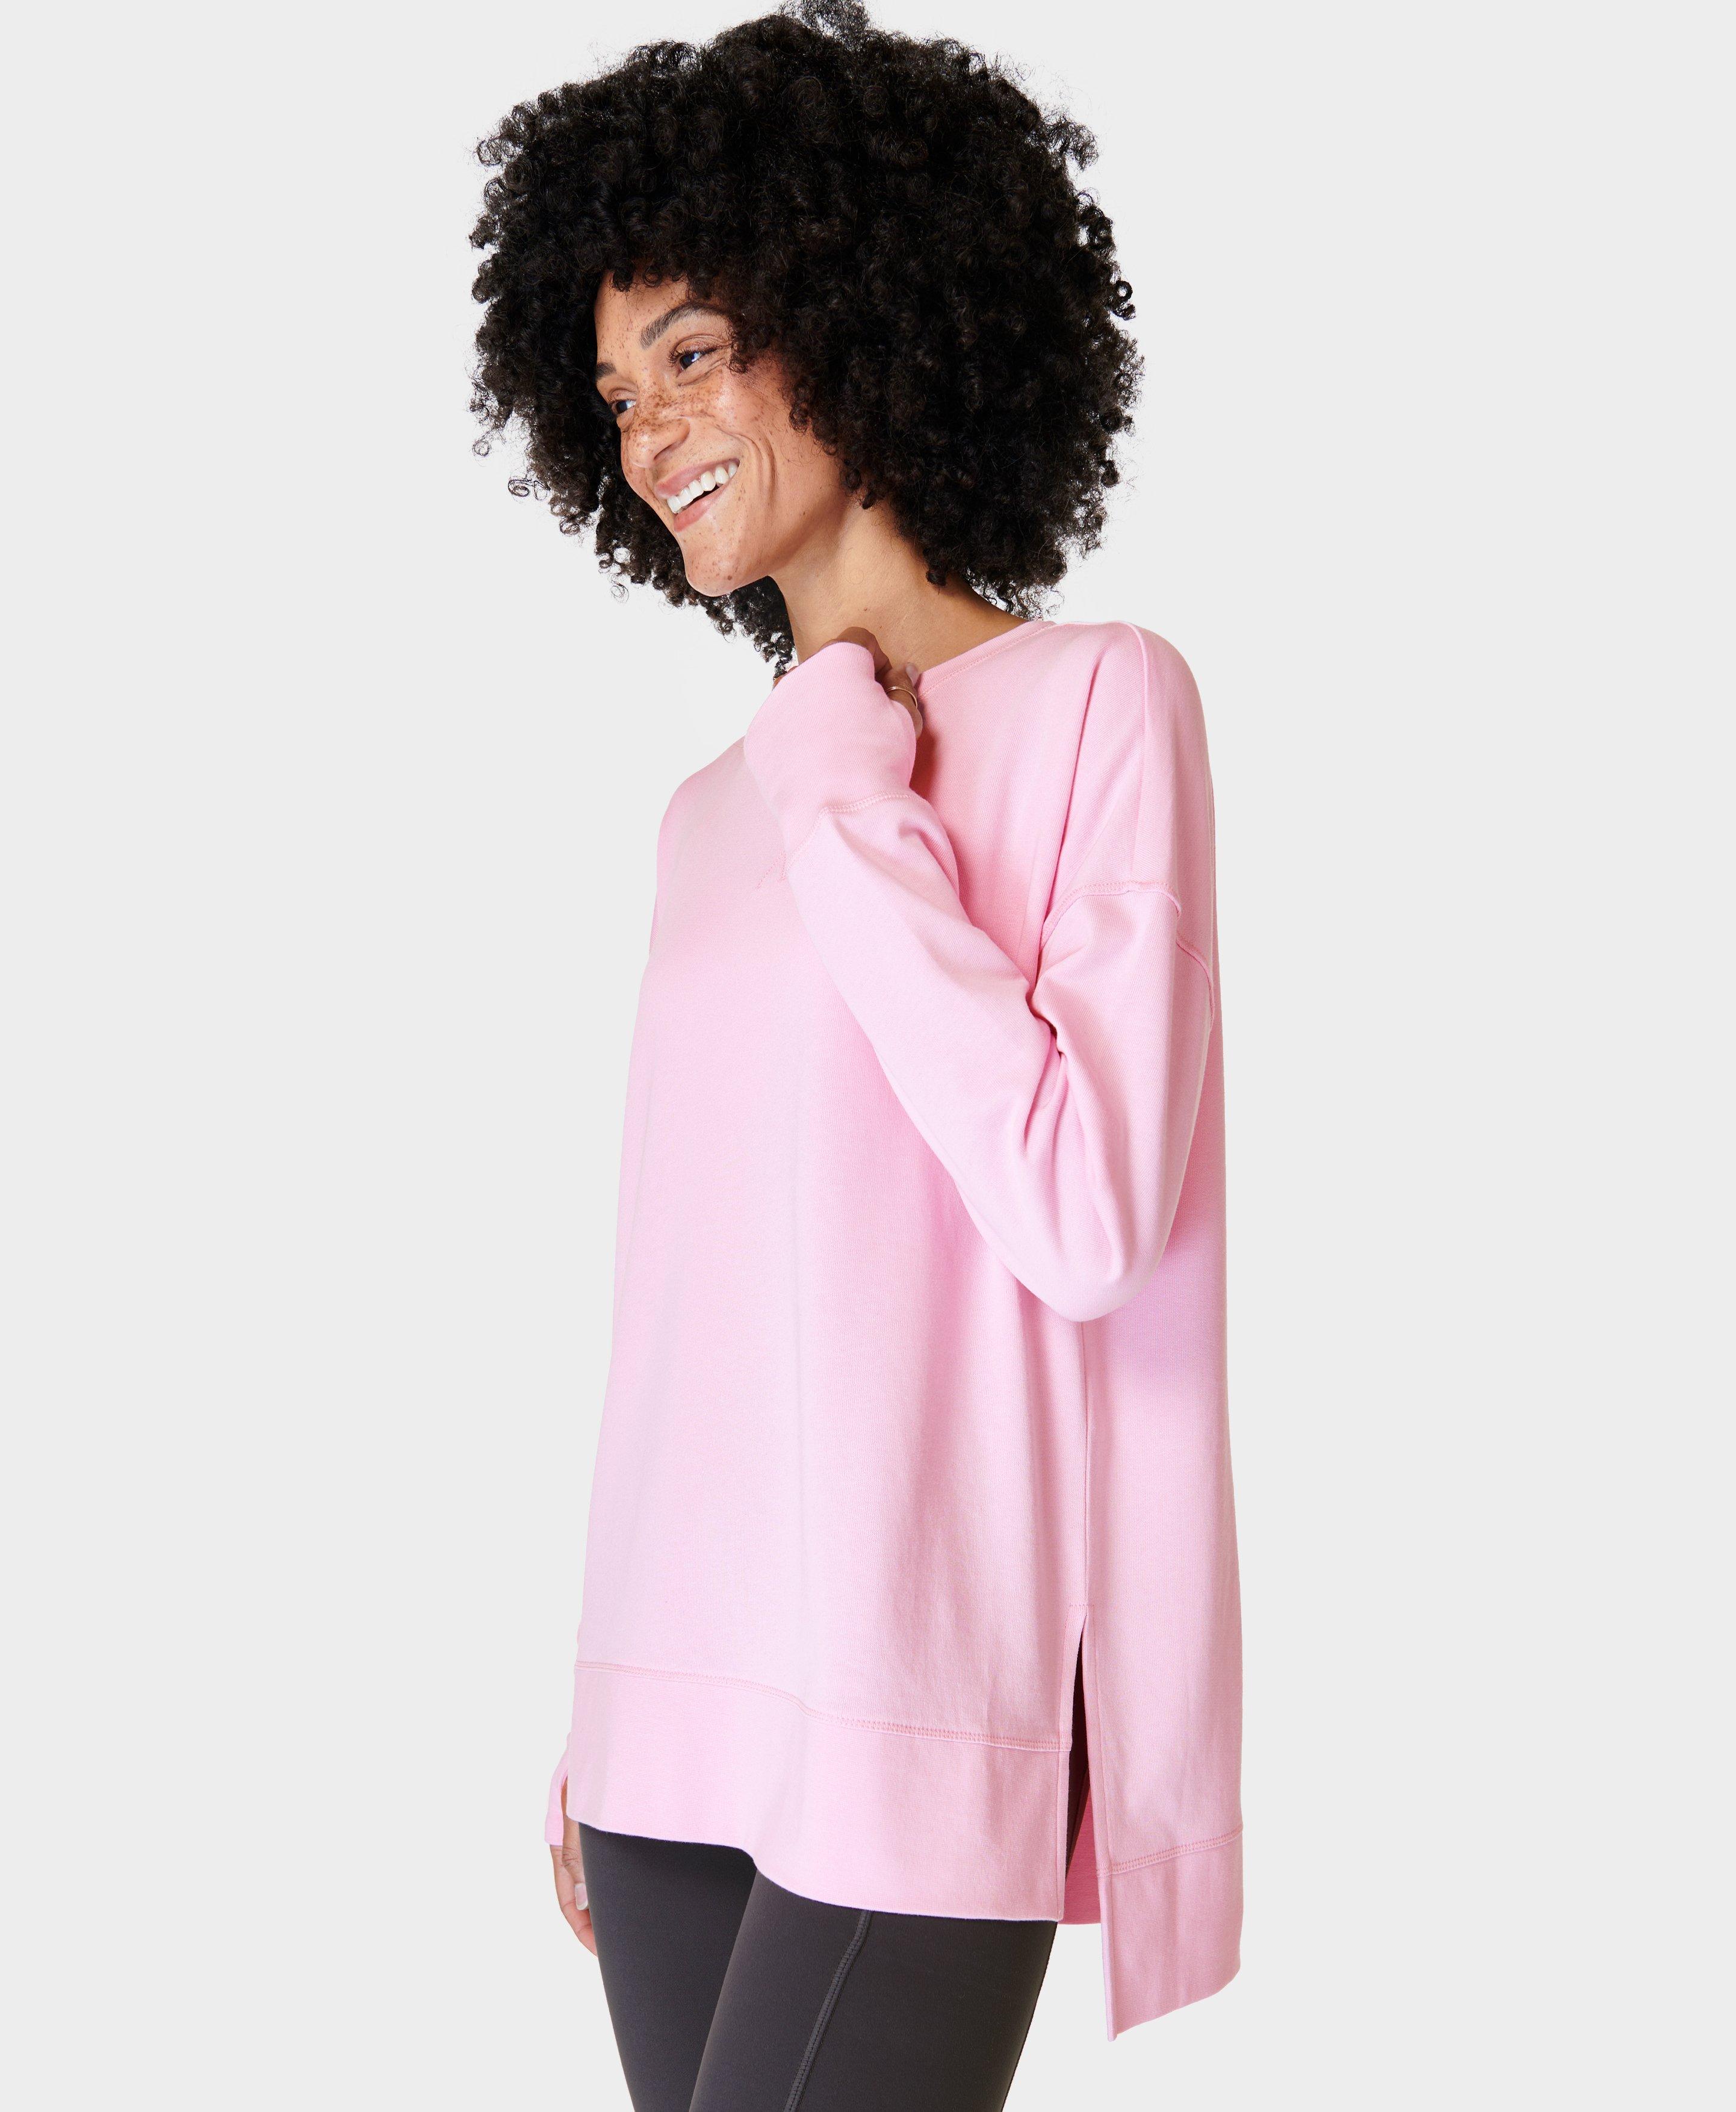 After Class Longline Sweatshirt - Chalk Pink, Women's Jumpers + Hoodies